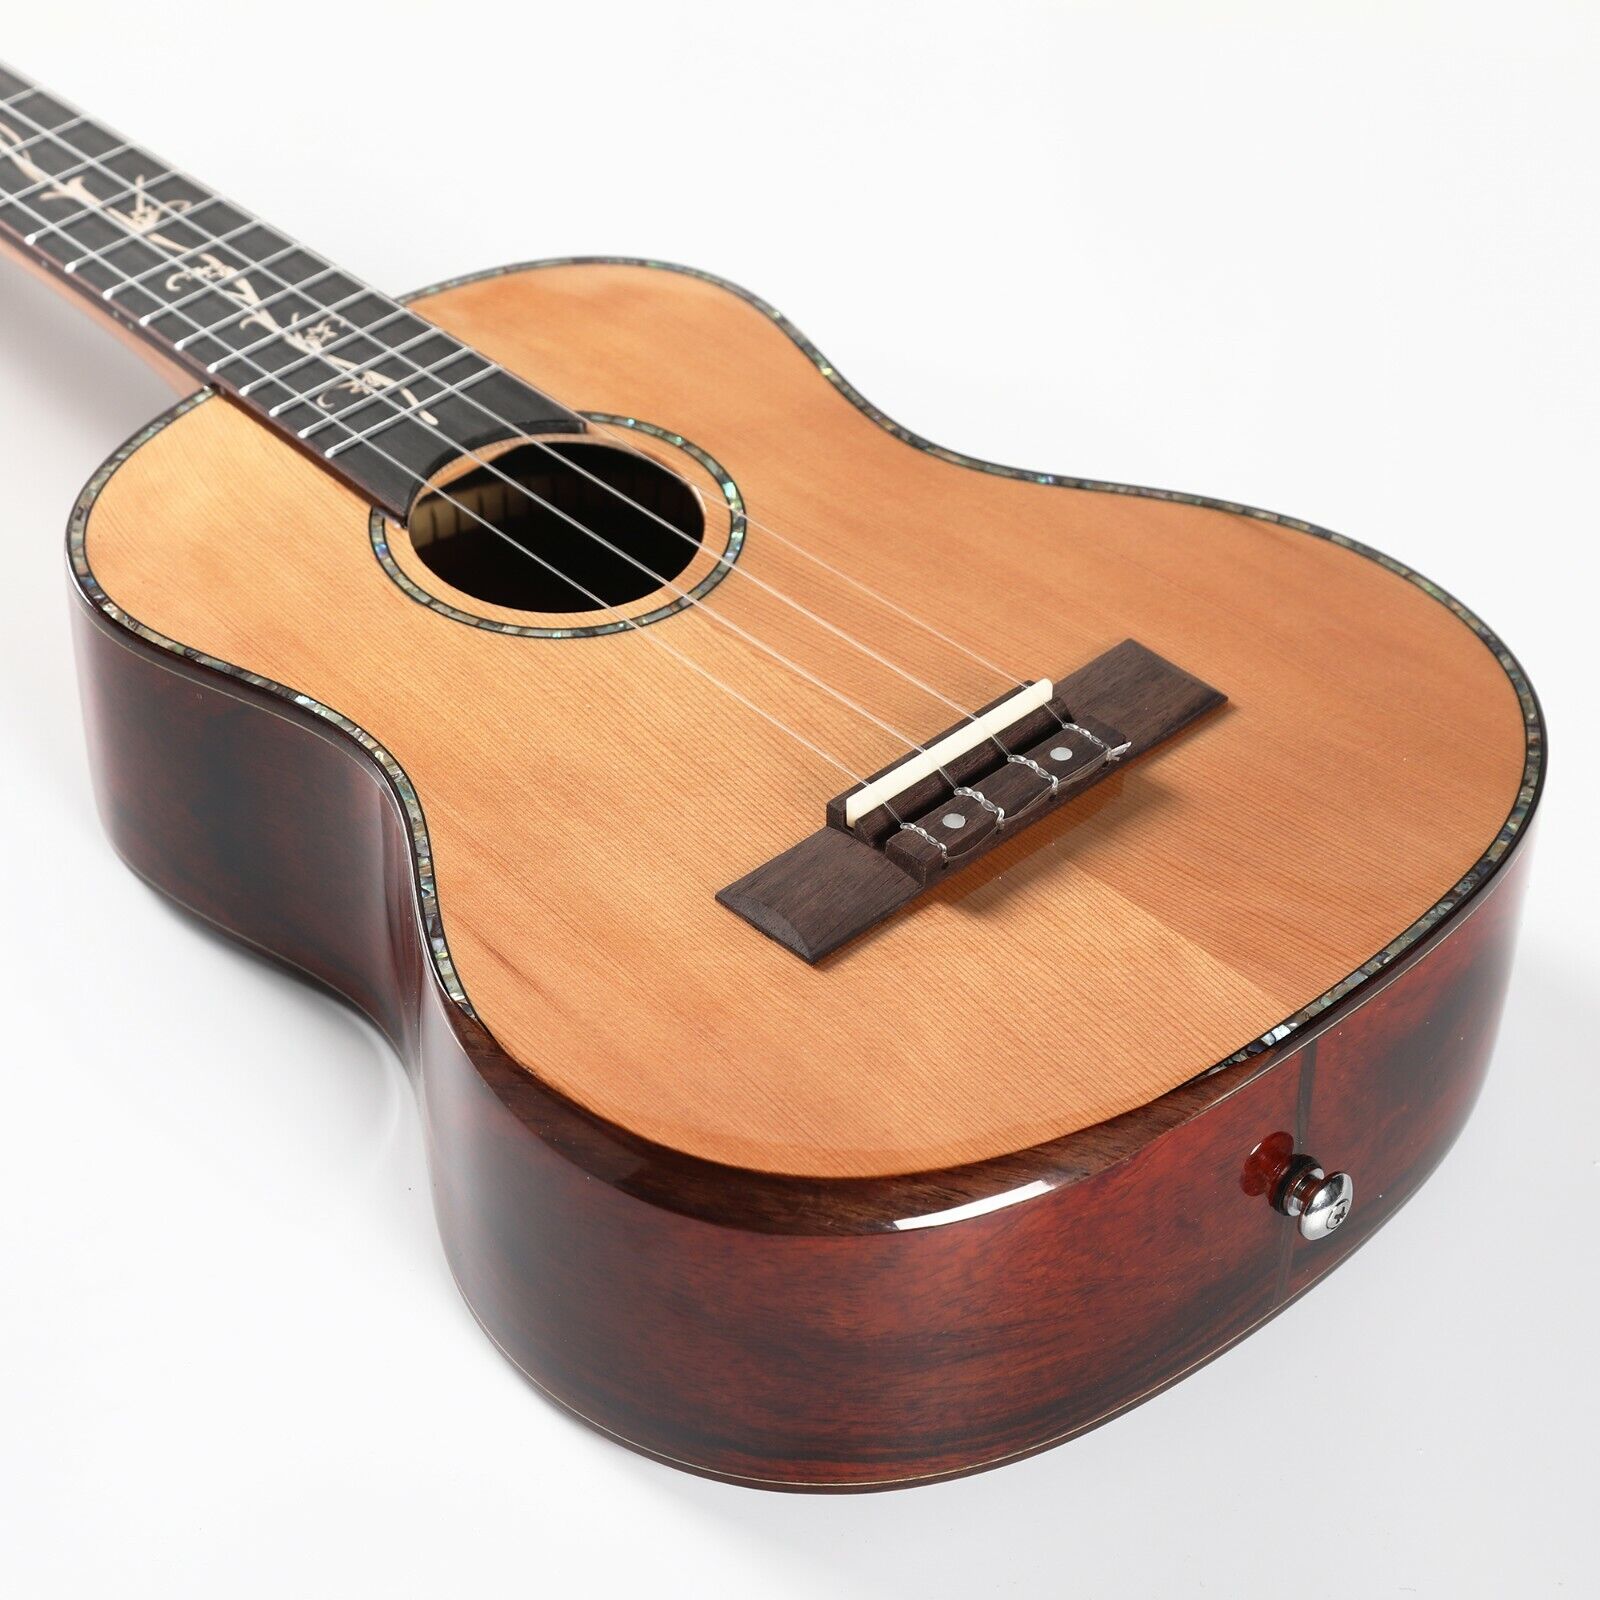 All solid wood 26 inch tenor ukulele ukelele uke guitar with sponge bag 5